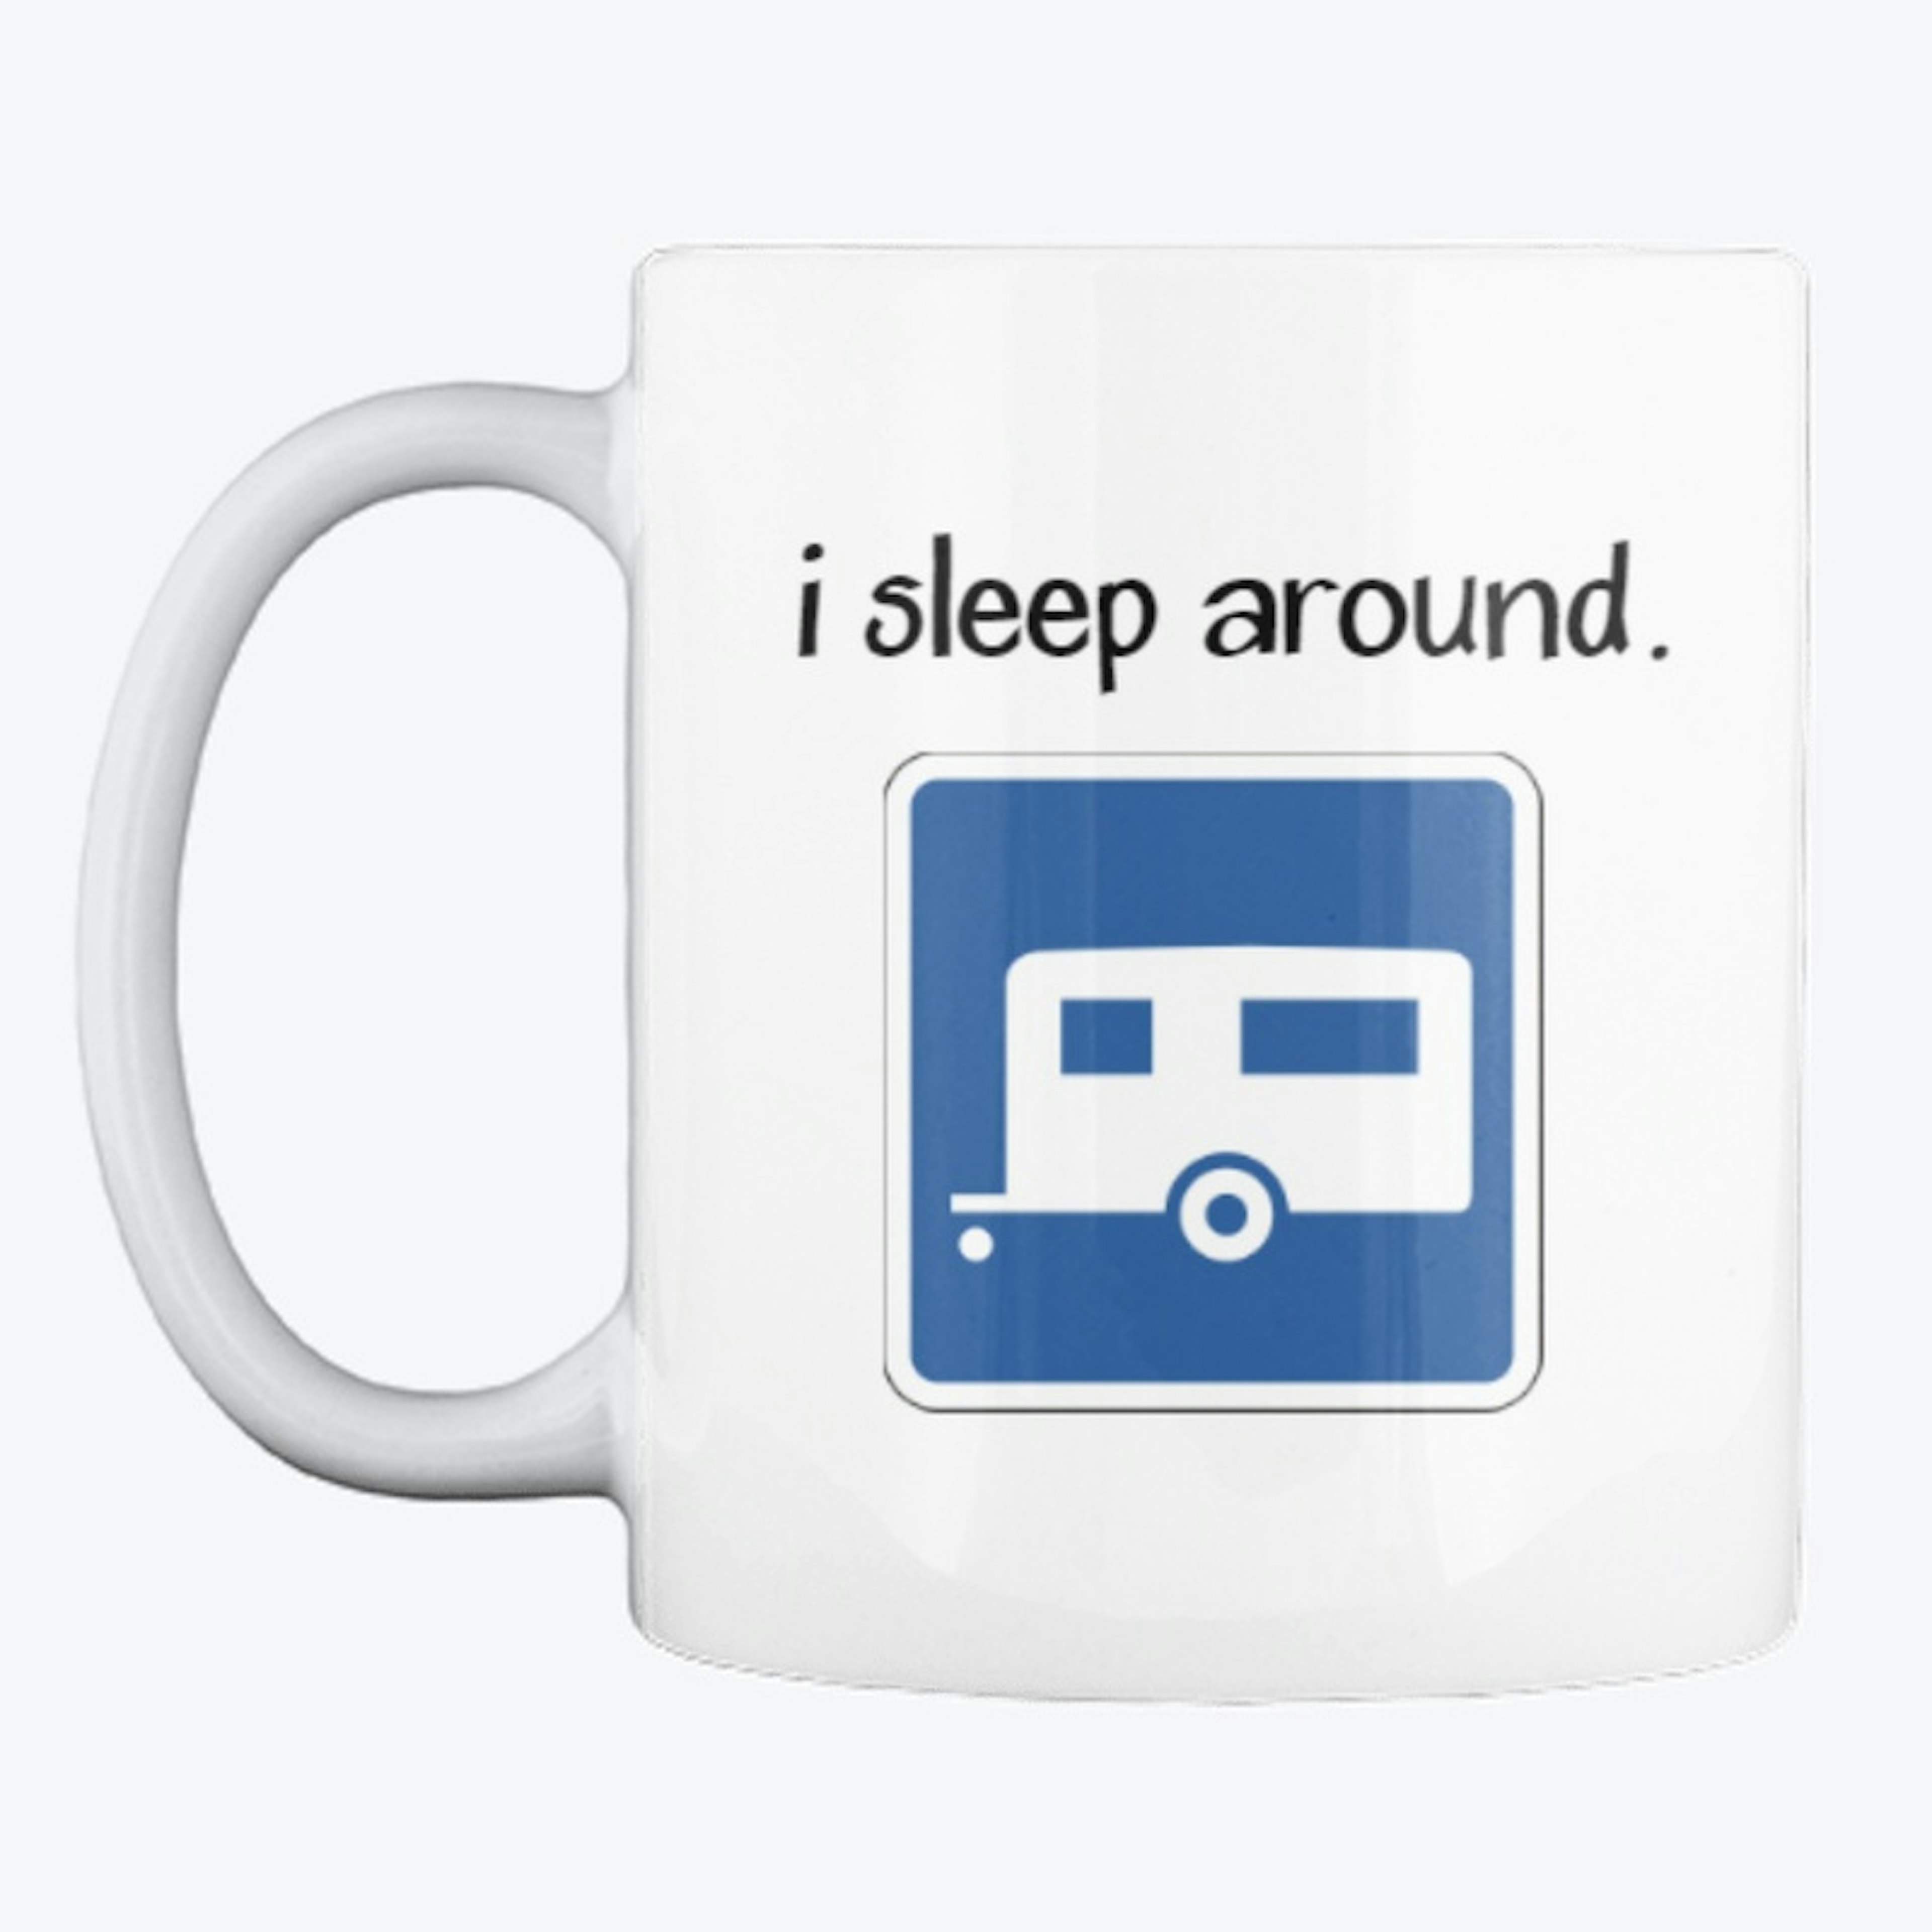 "I sleep around" logo ceramic mug